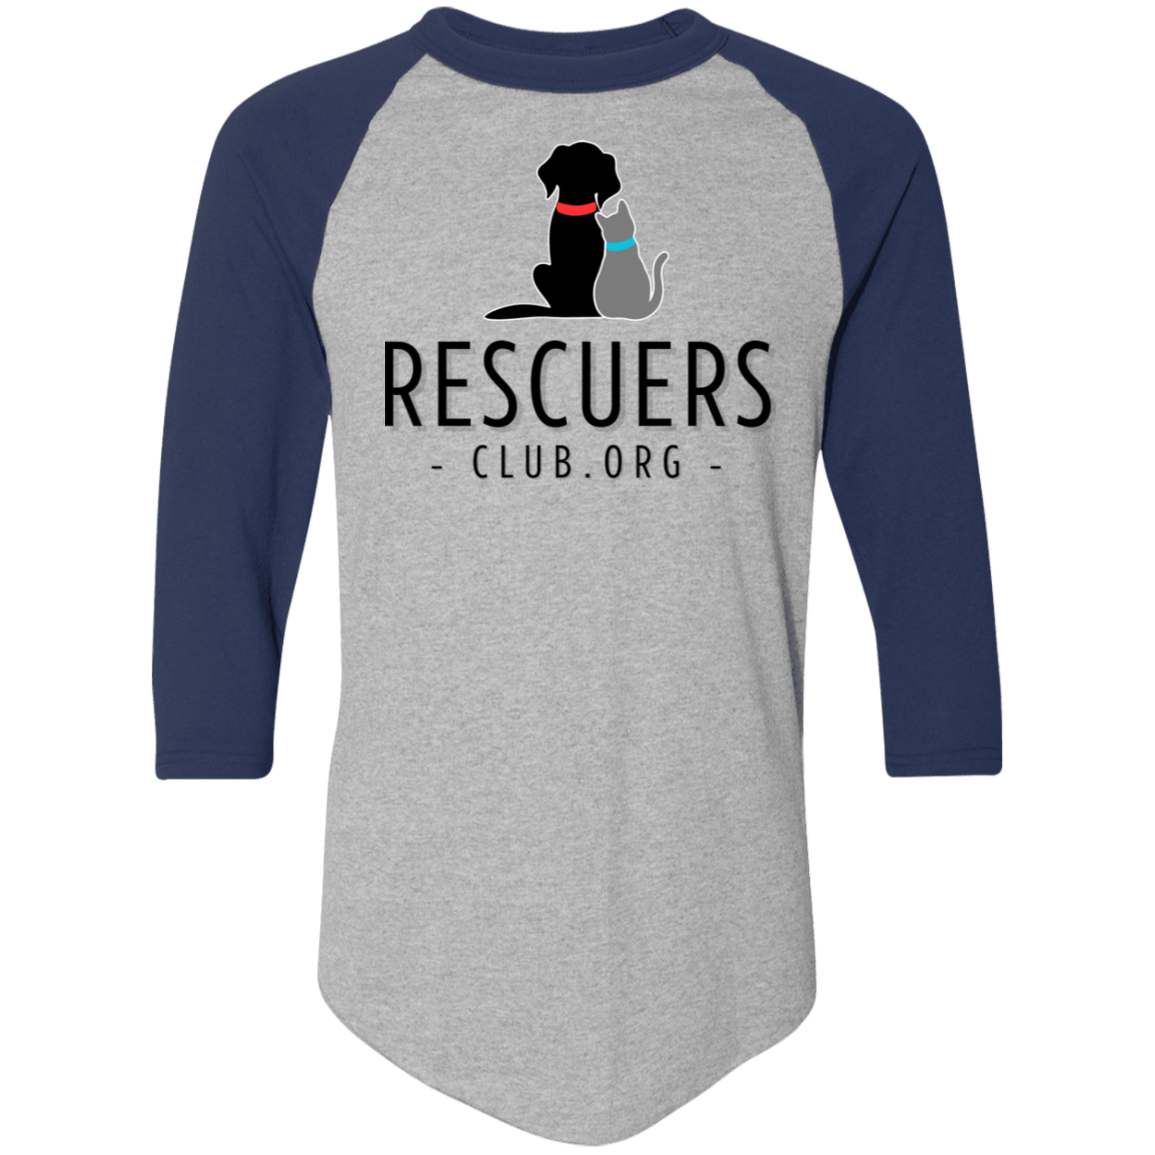 Rescuers Club Logo Colorblock Raglan Jersey